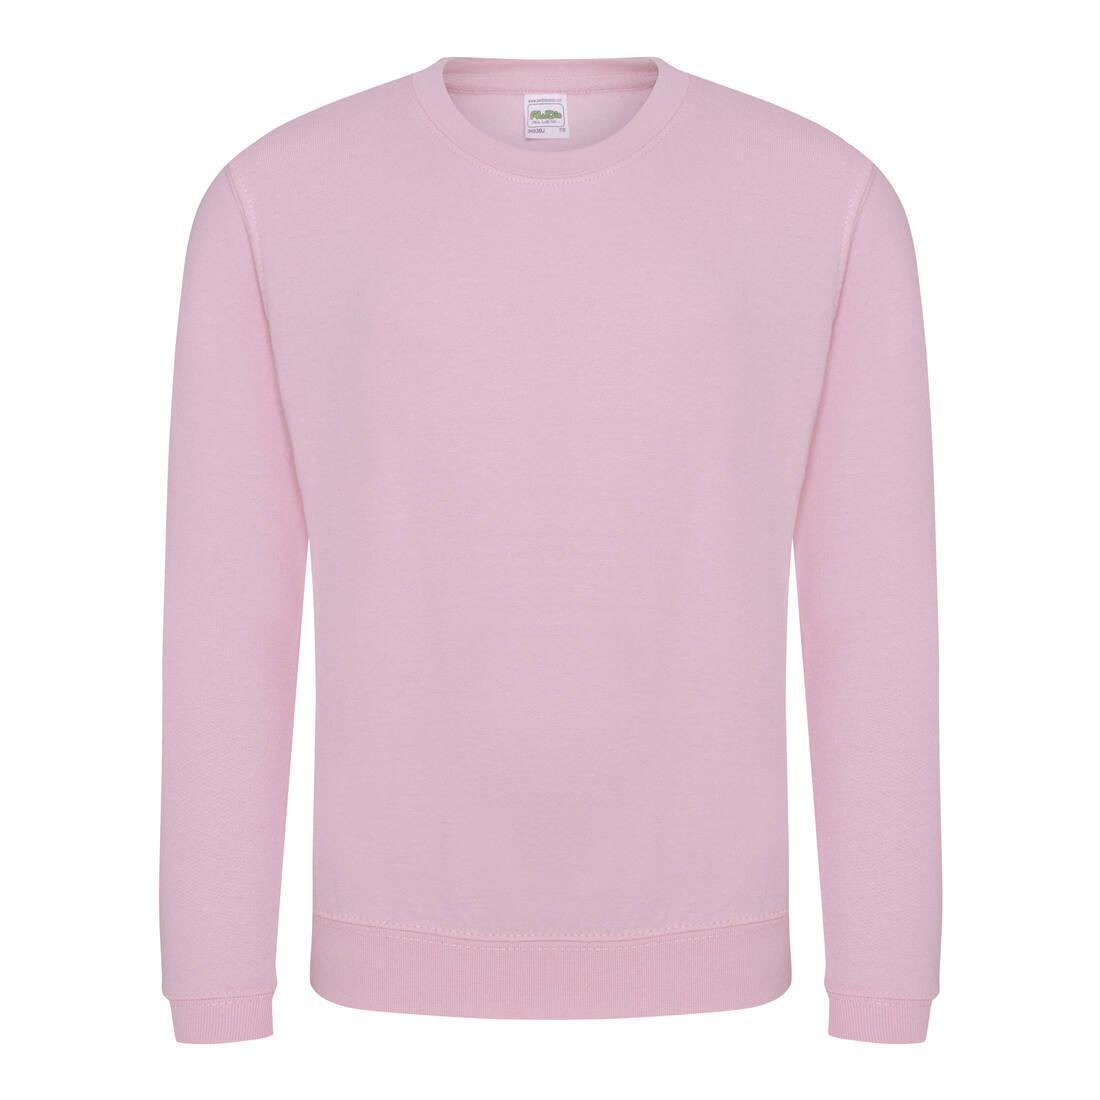 Kinder sweatshirts baby pink personaliseer je sweatshirts